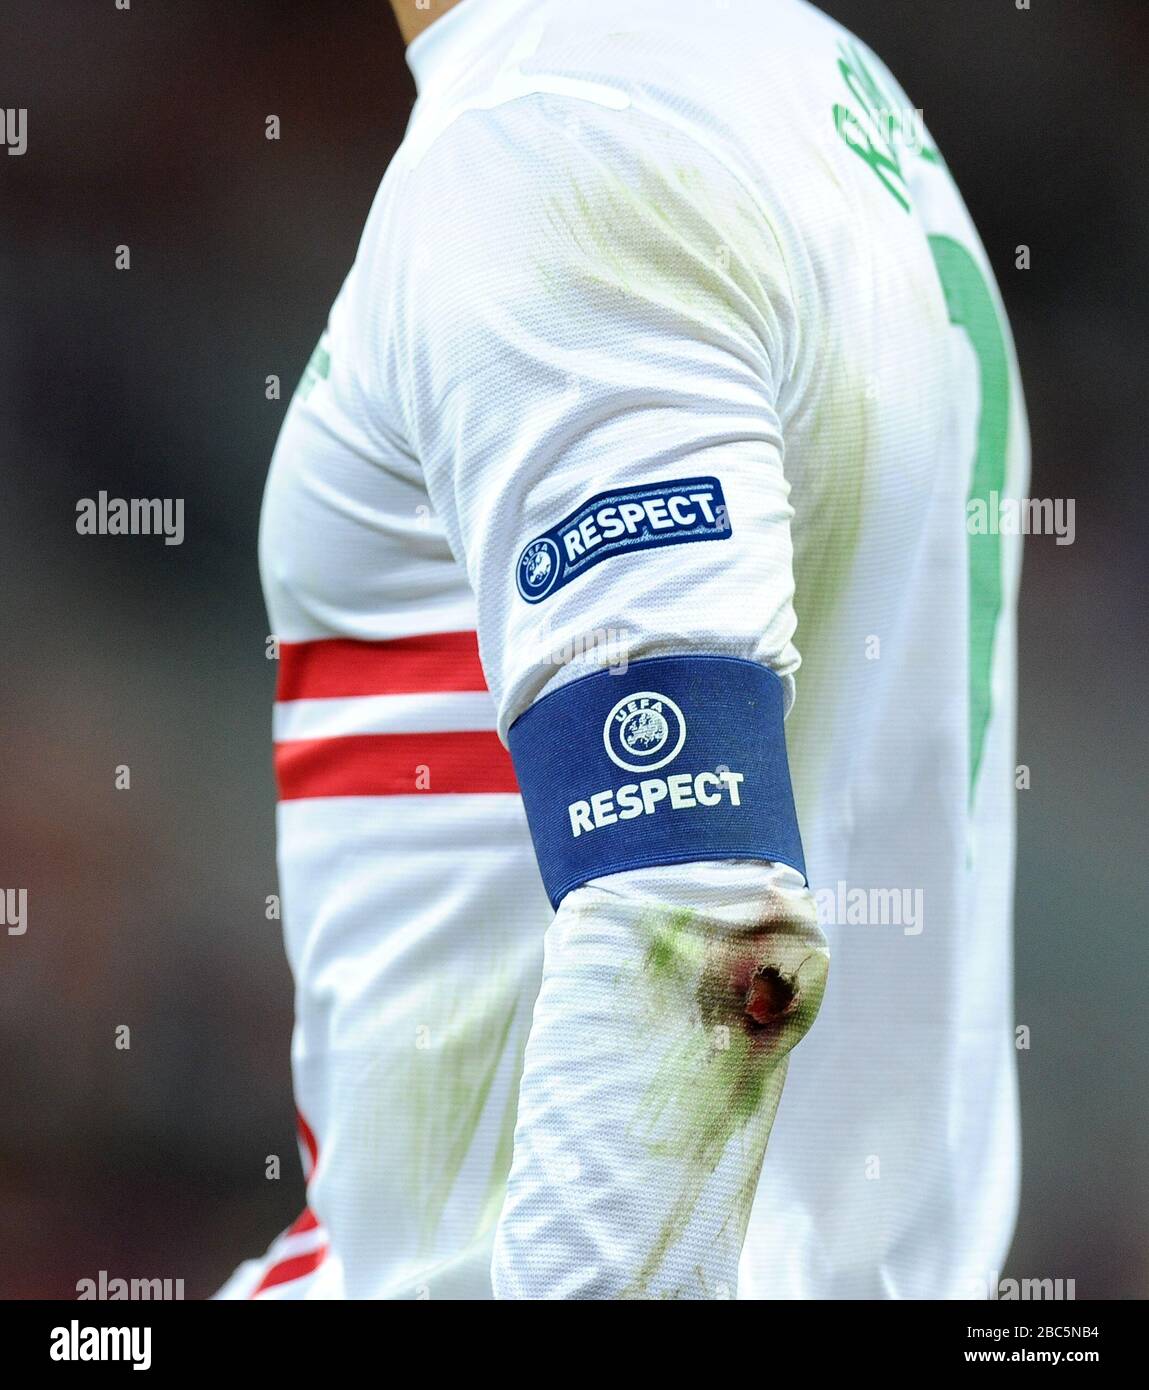 UEFA Respect badge and Captain's armband on Portugal's Cristiano Ronaldo's  shirt Stock Photo - Alamy